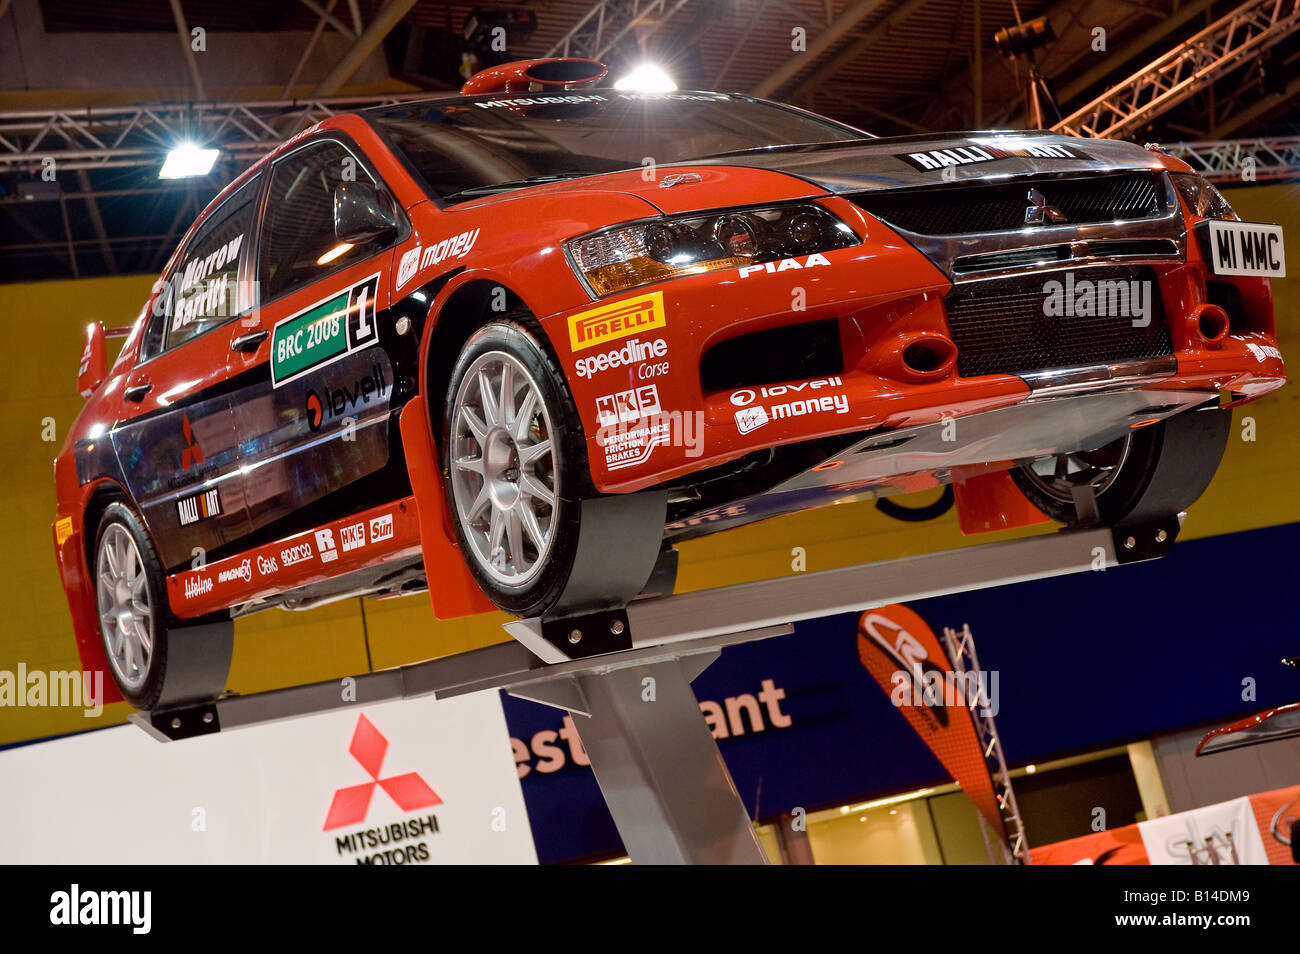 Mitsubishi Lancer Evo rally car, Autosport show Stock Photo